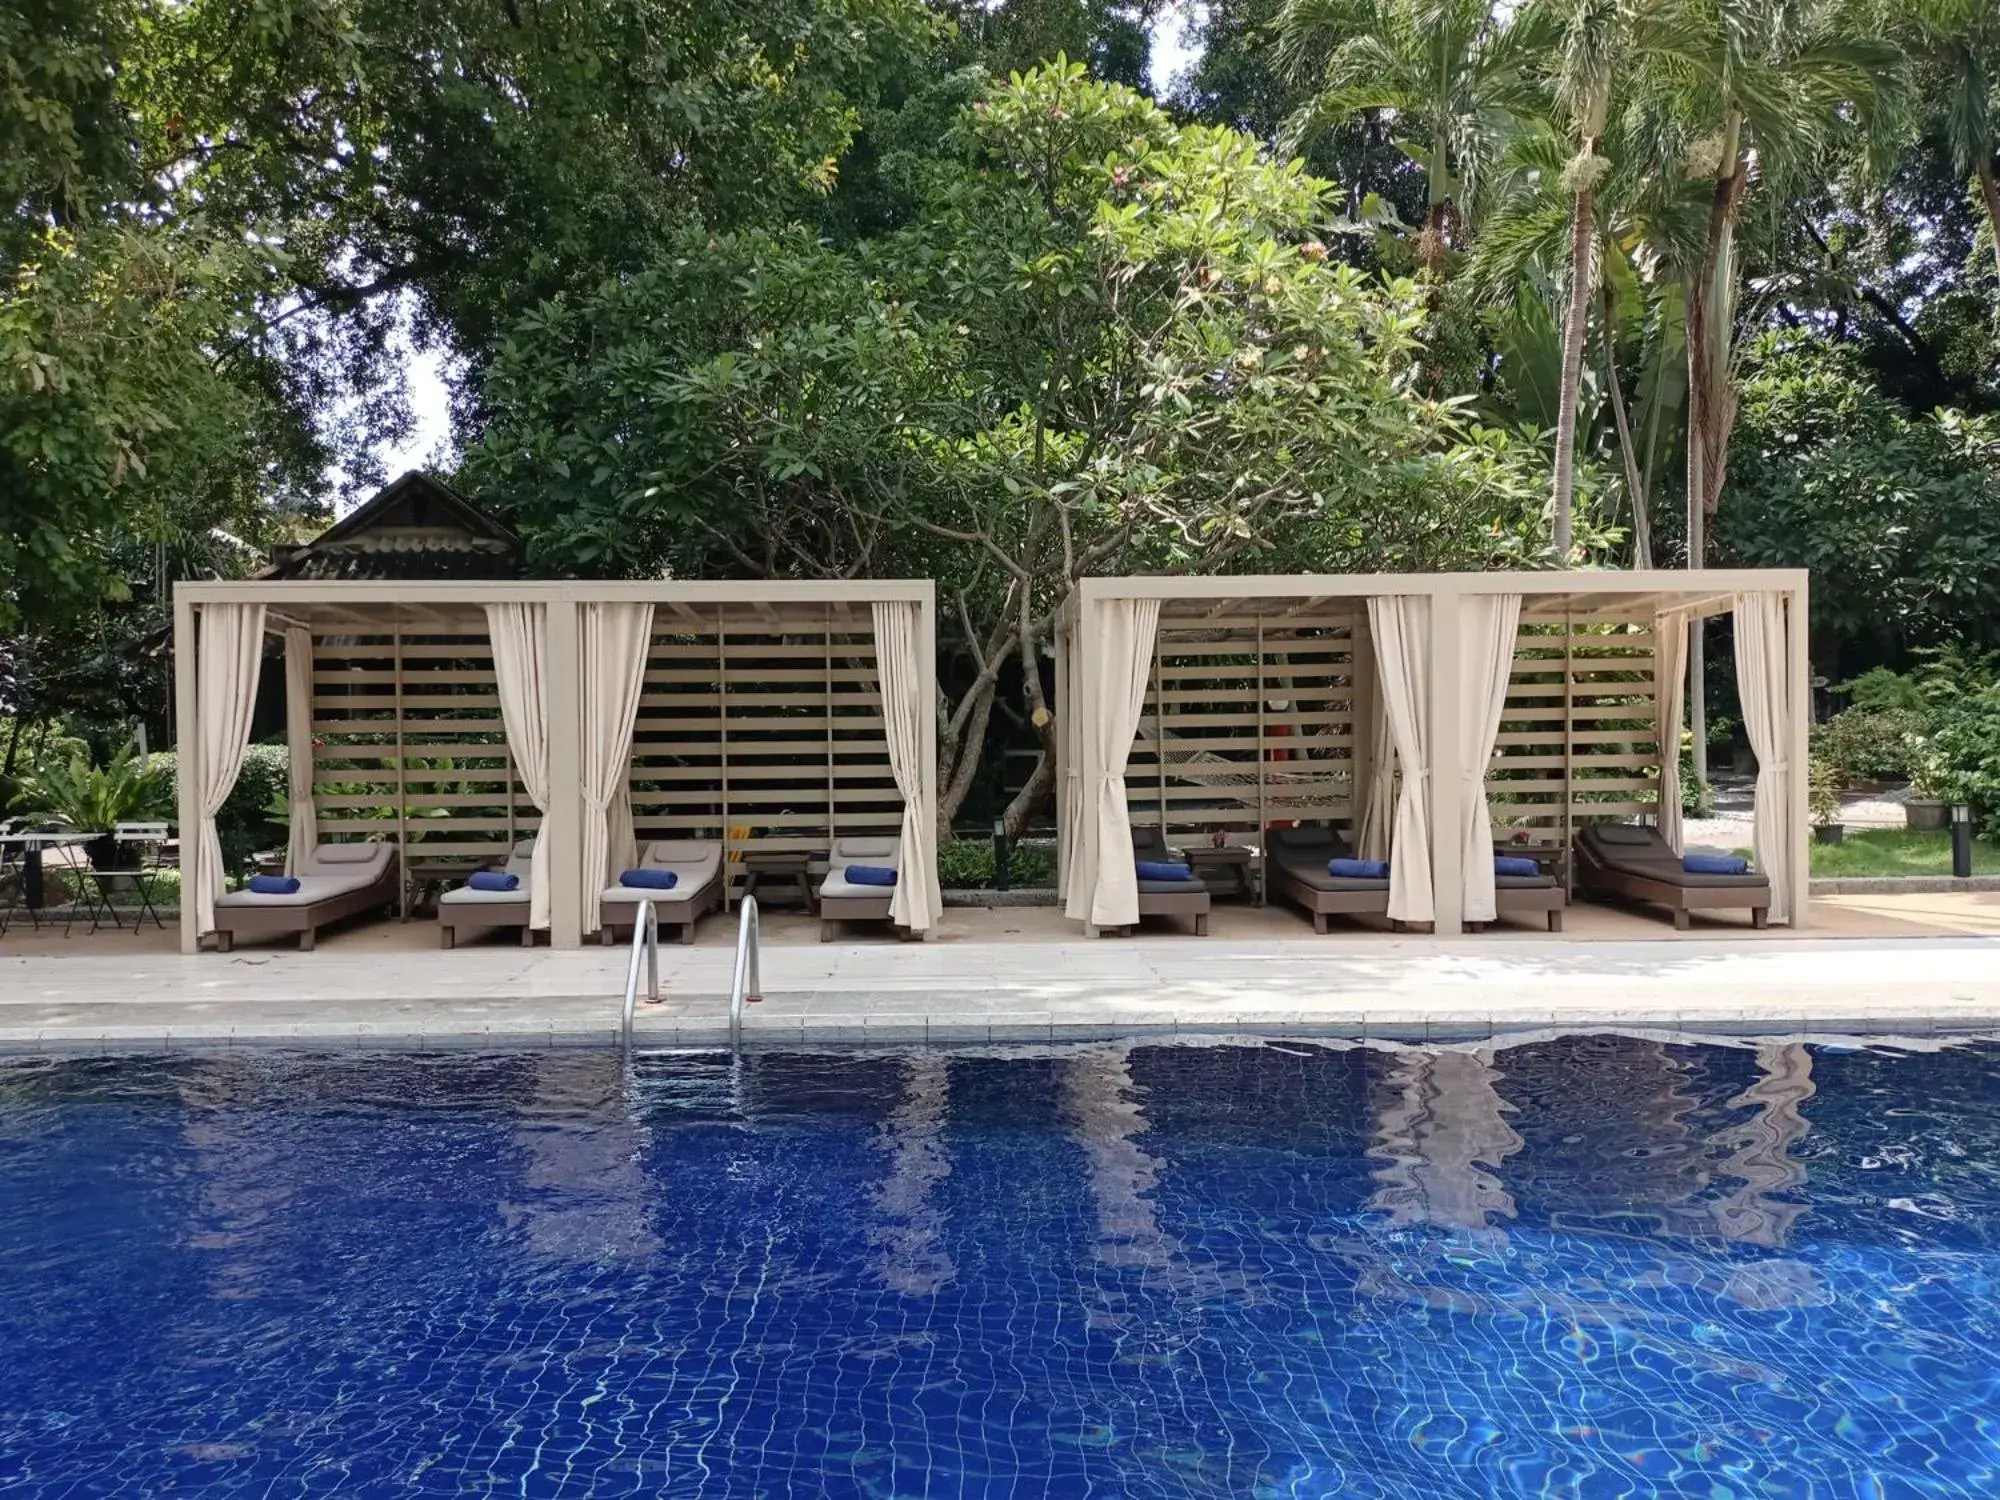 Swimming Pool in Let's Hyde Pattaya Resort & Villas - Pool Cabanas